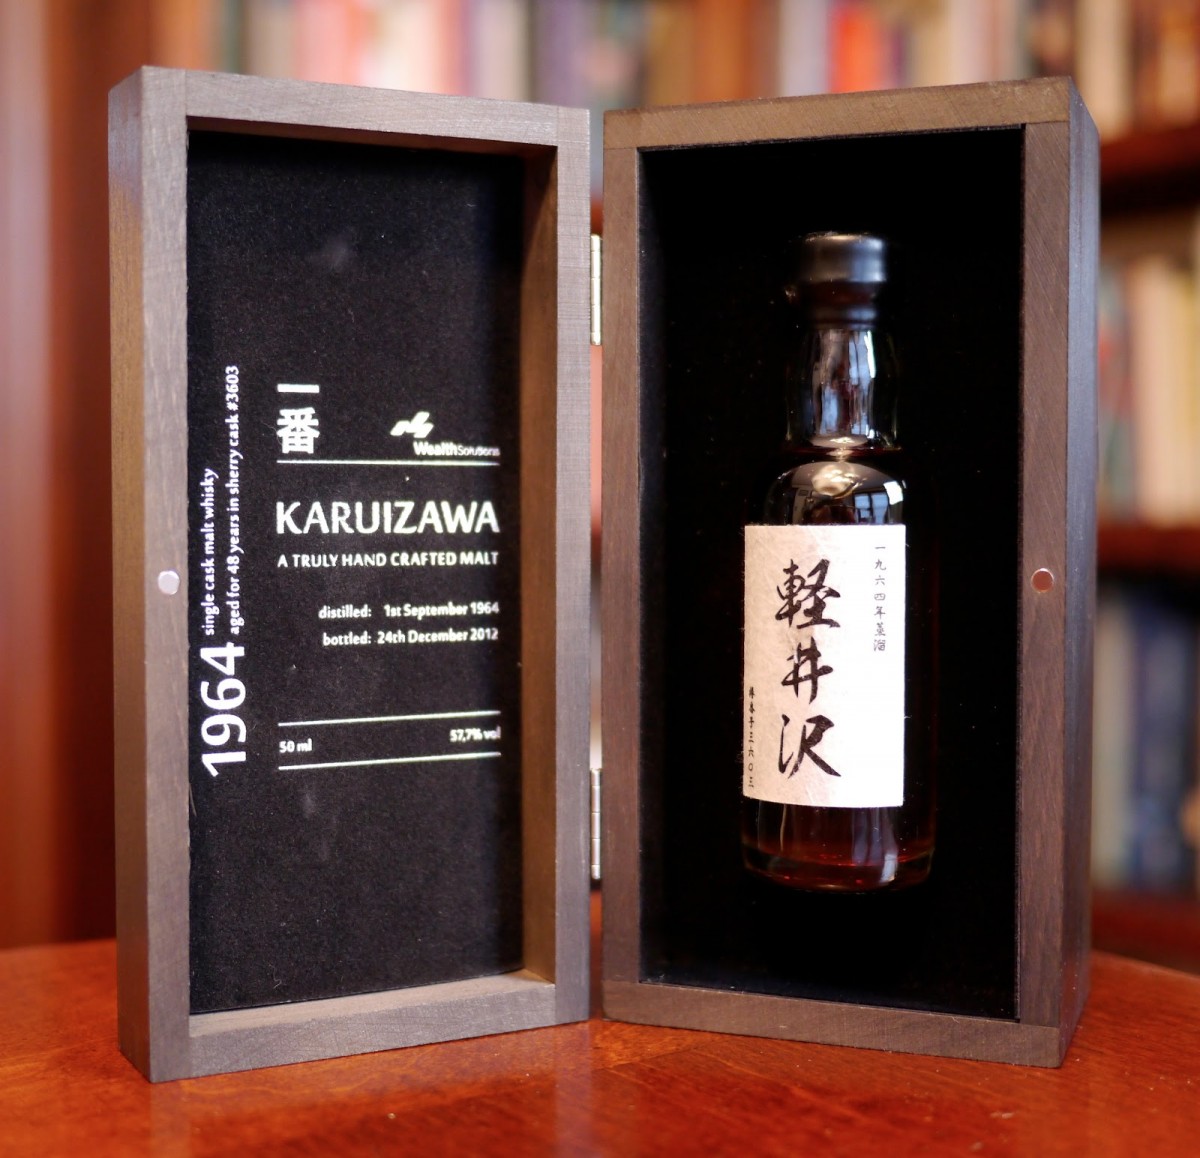 Karuizawa whisky 1964